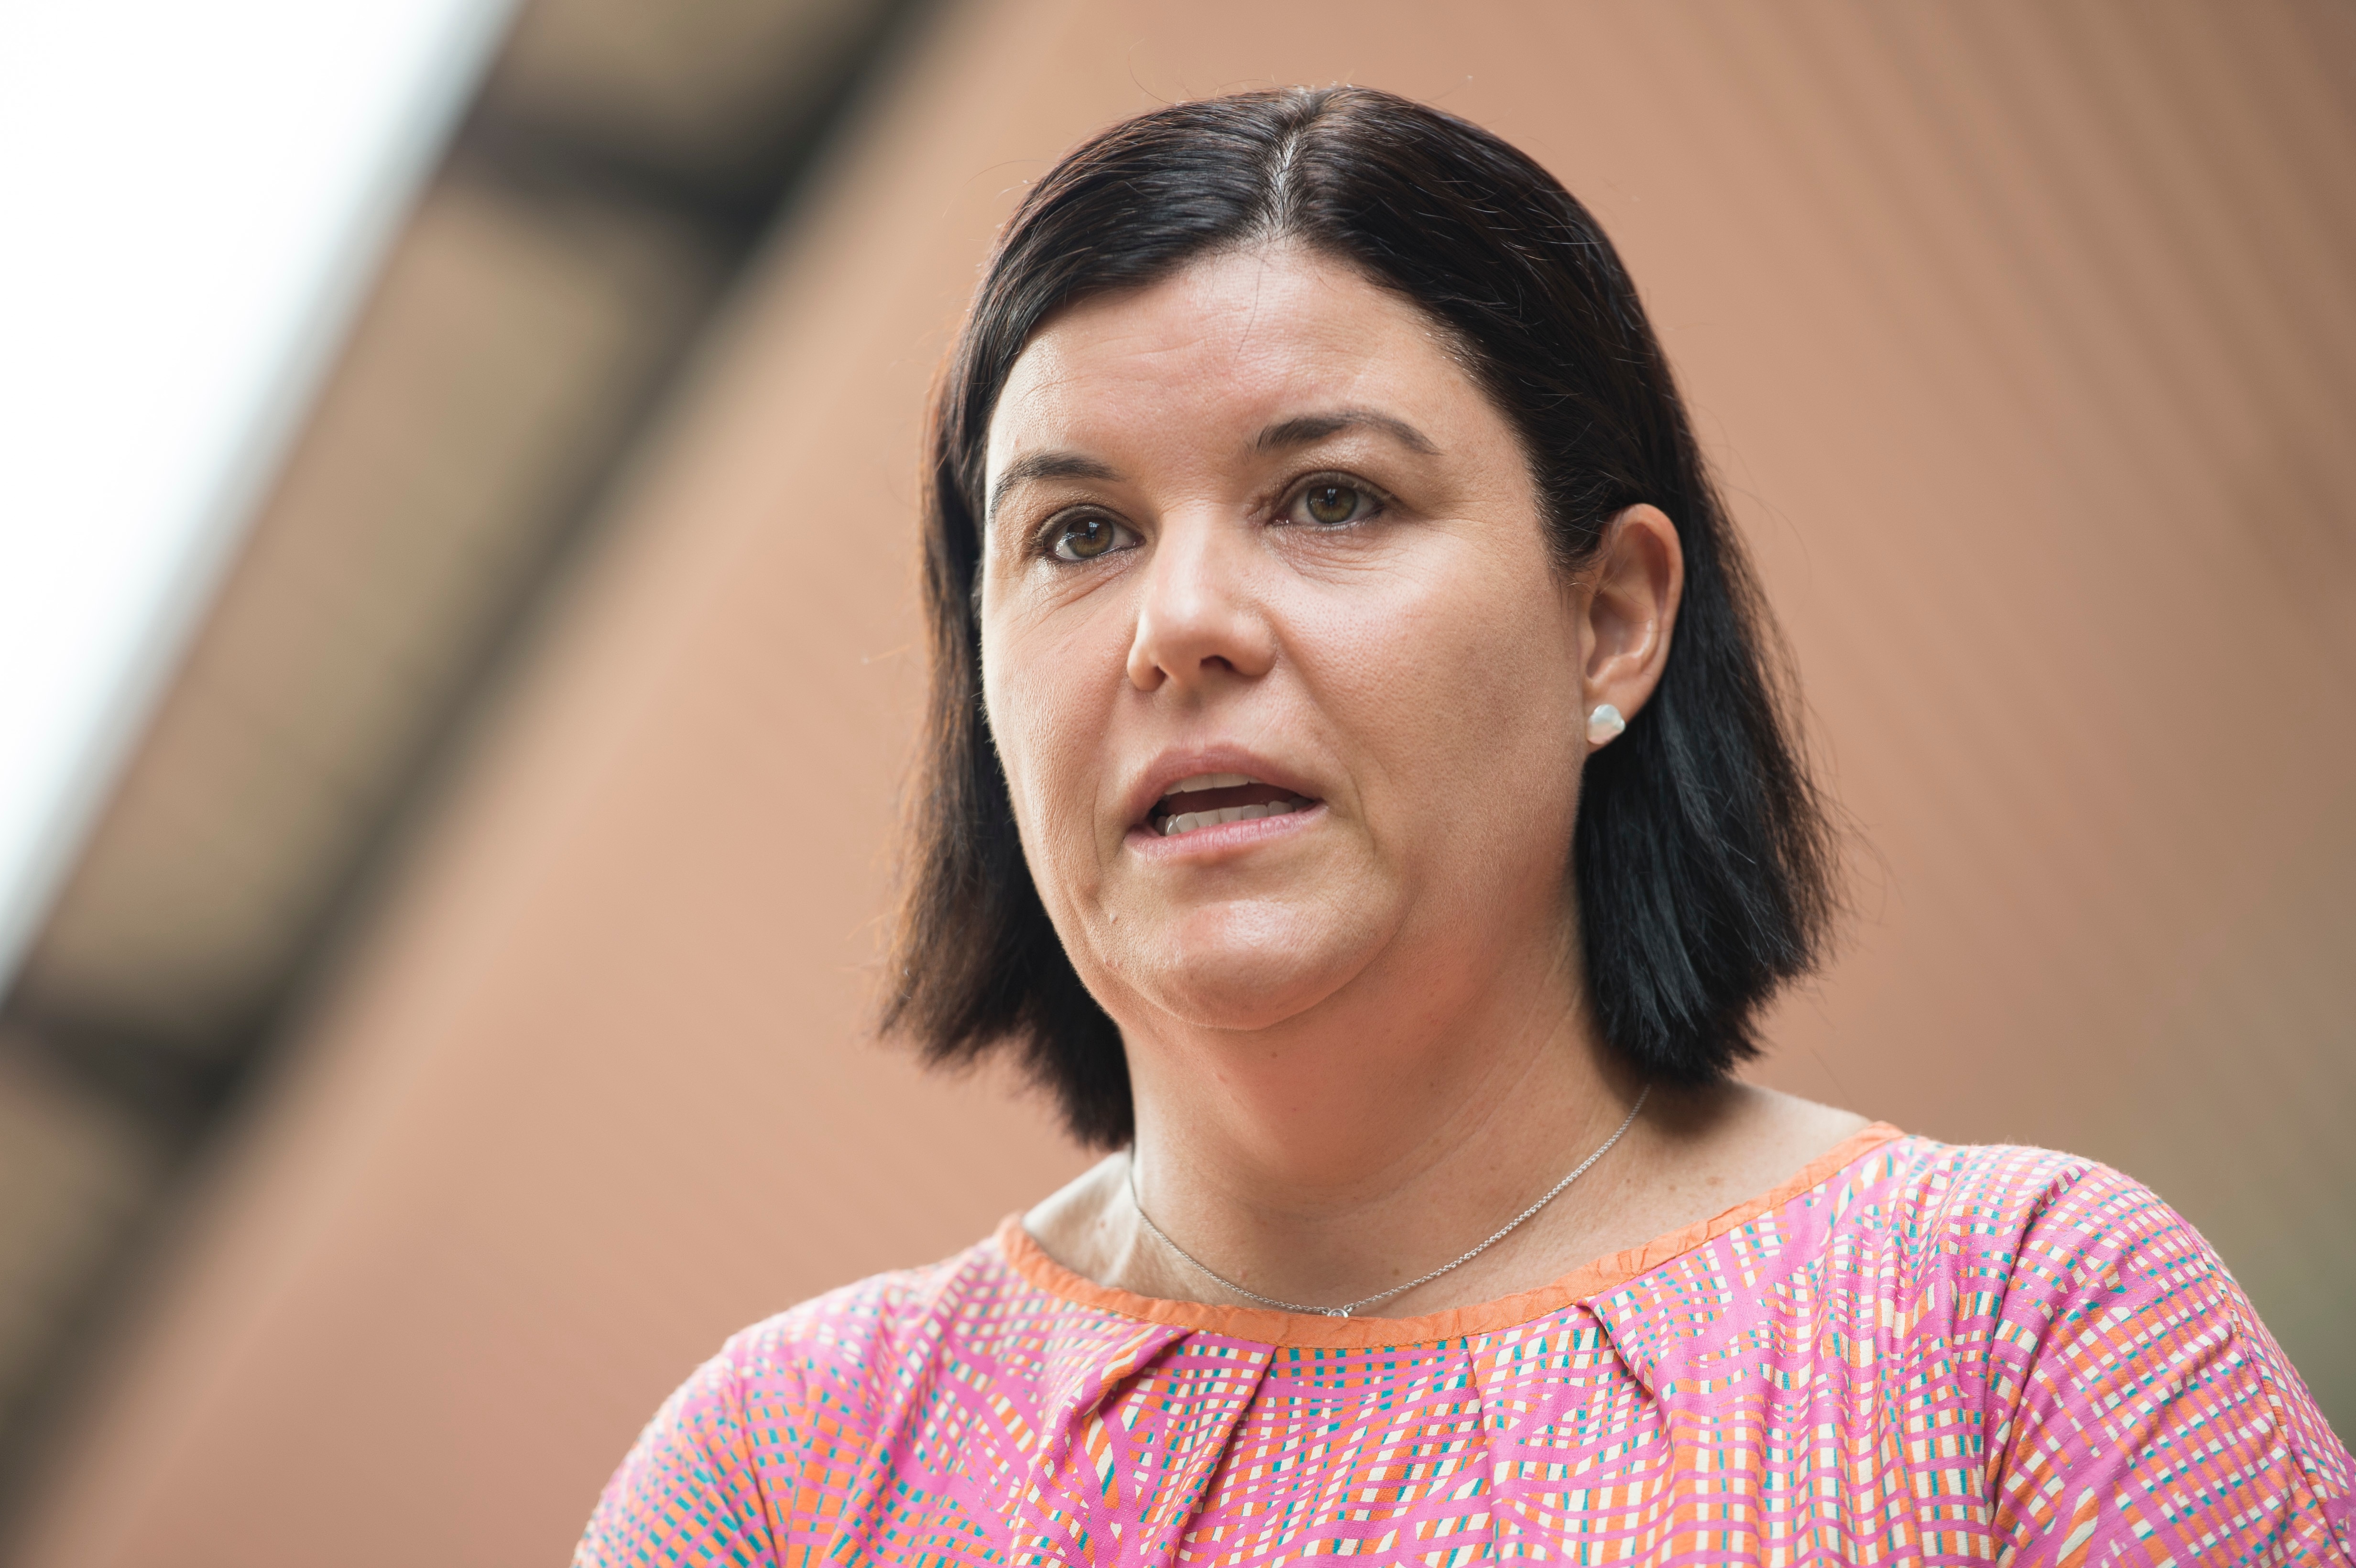 Northern Territory Health Minister Natasha Fyles introduced the amendments.